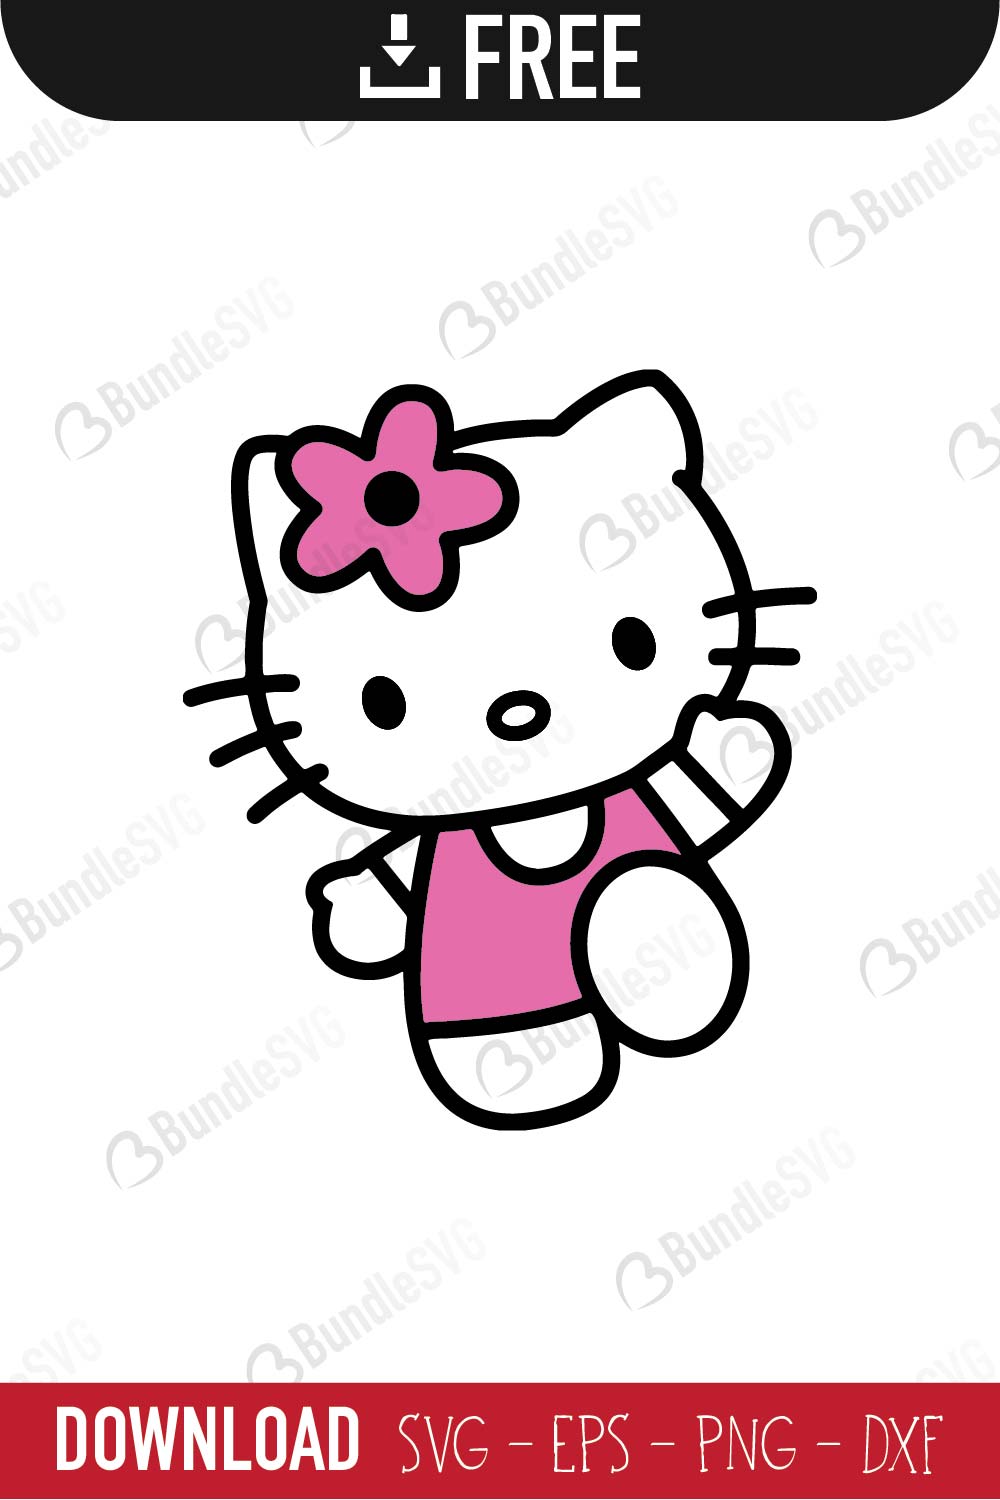 Free Hello Kitty SVG Cut Files Free Download | BundleSVG.com